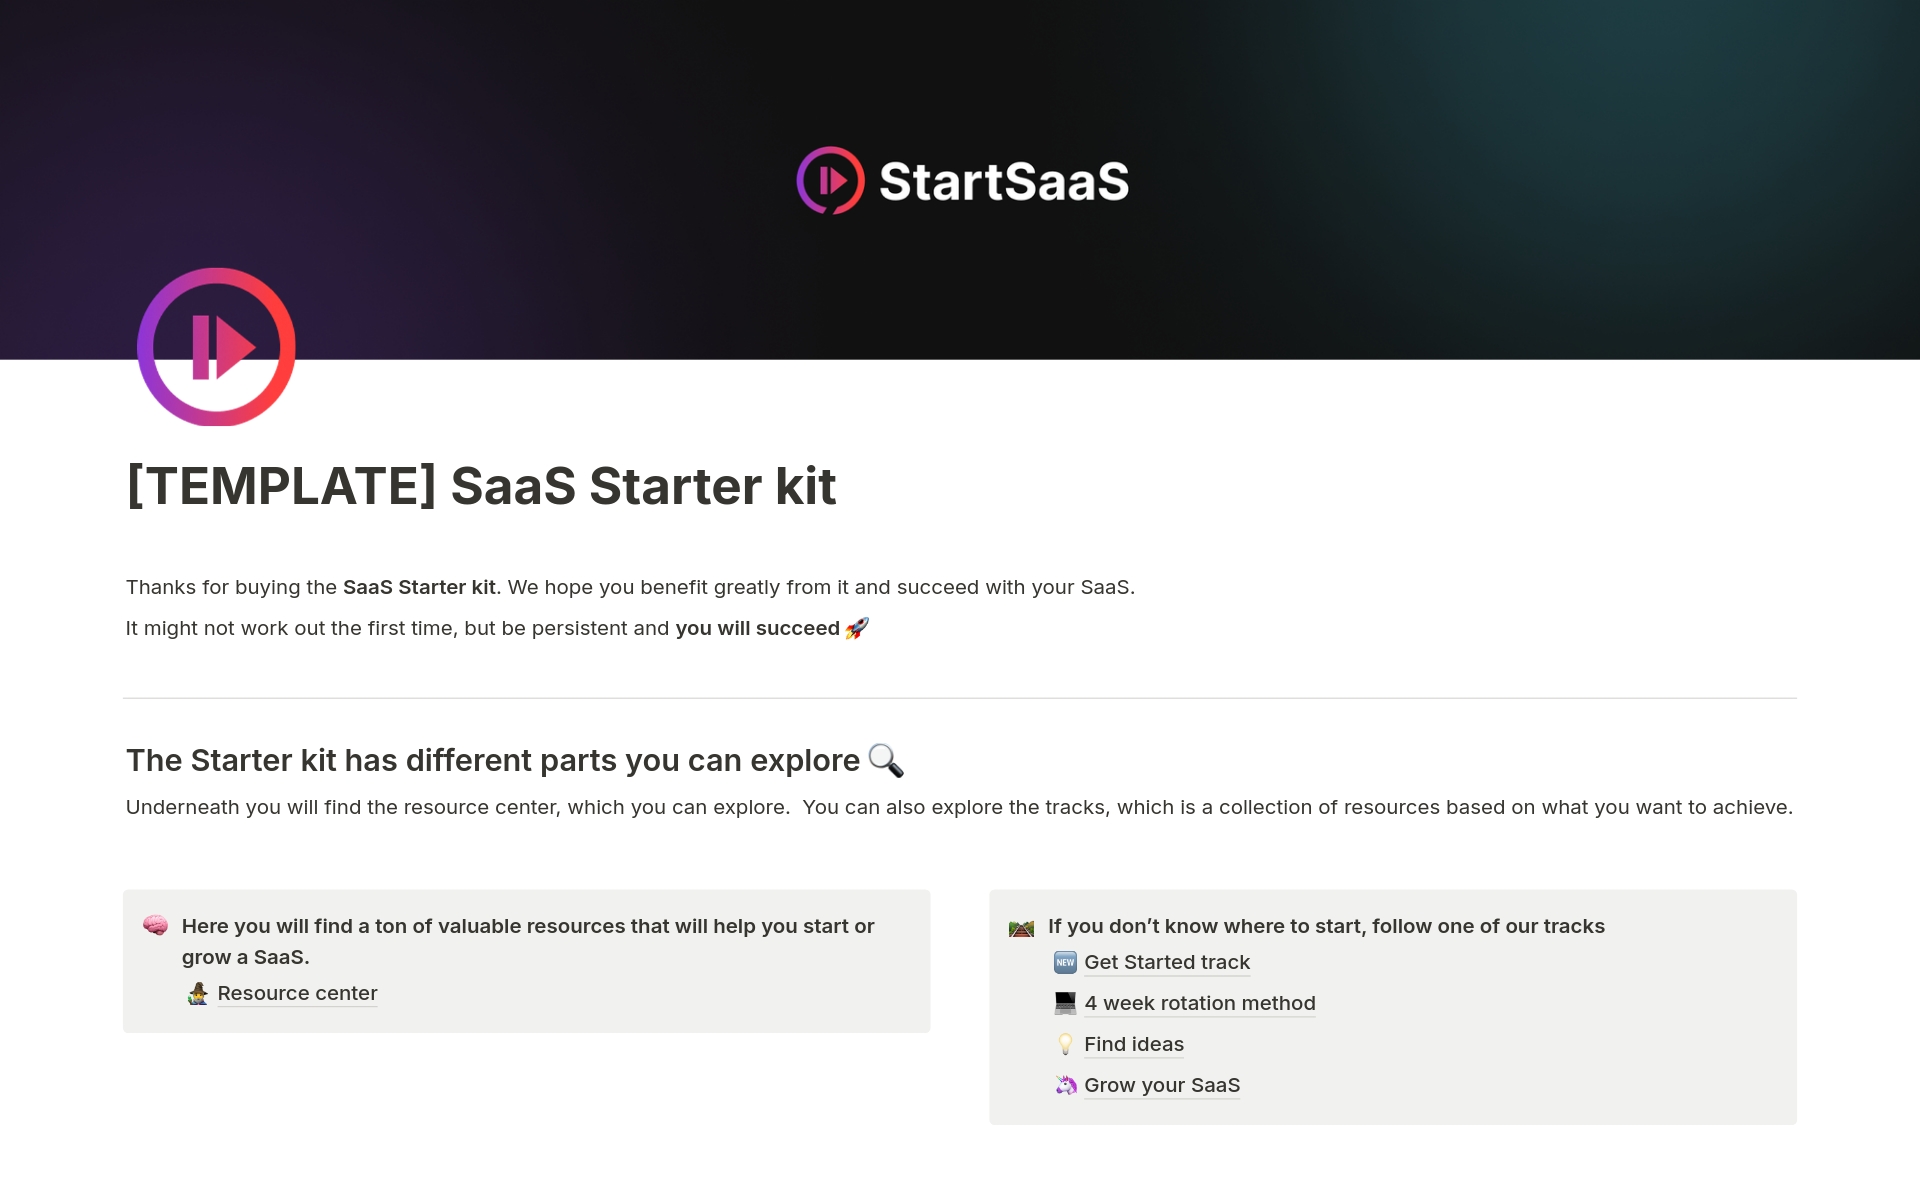 Vista previa de una plantilla para SaaS Starter Kit